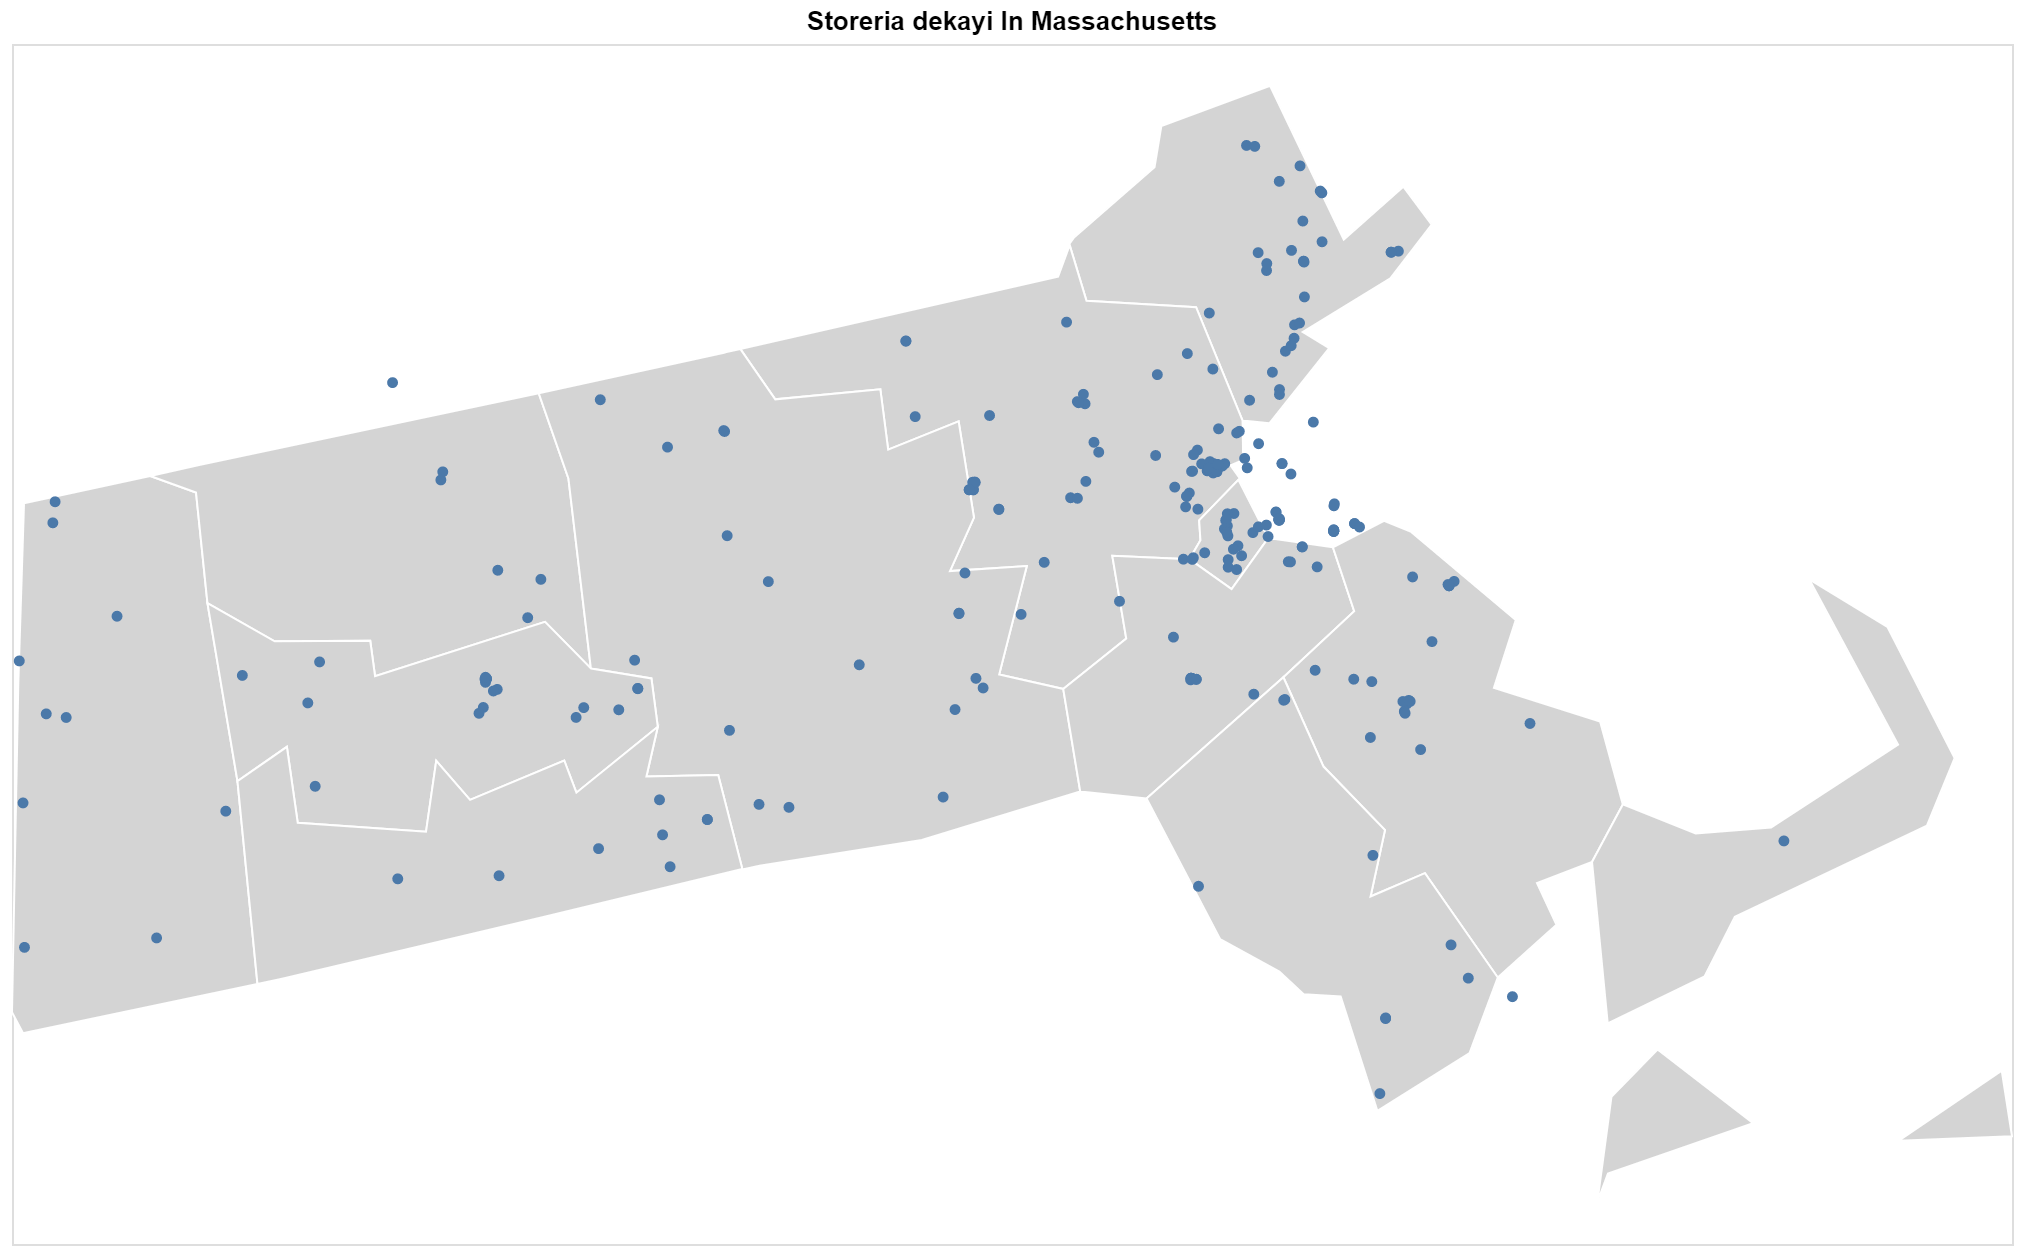 Storeria dekayi Massachusetts map